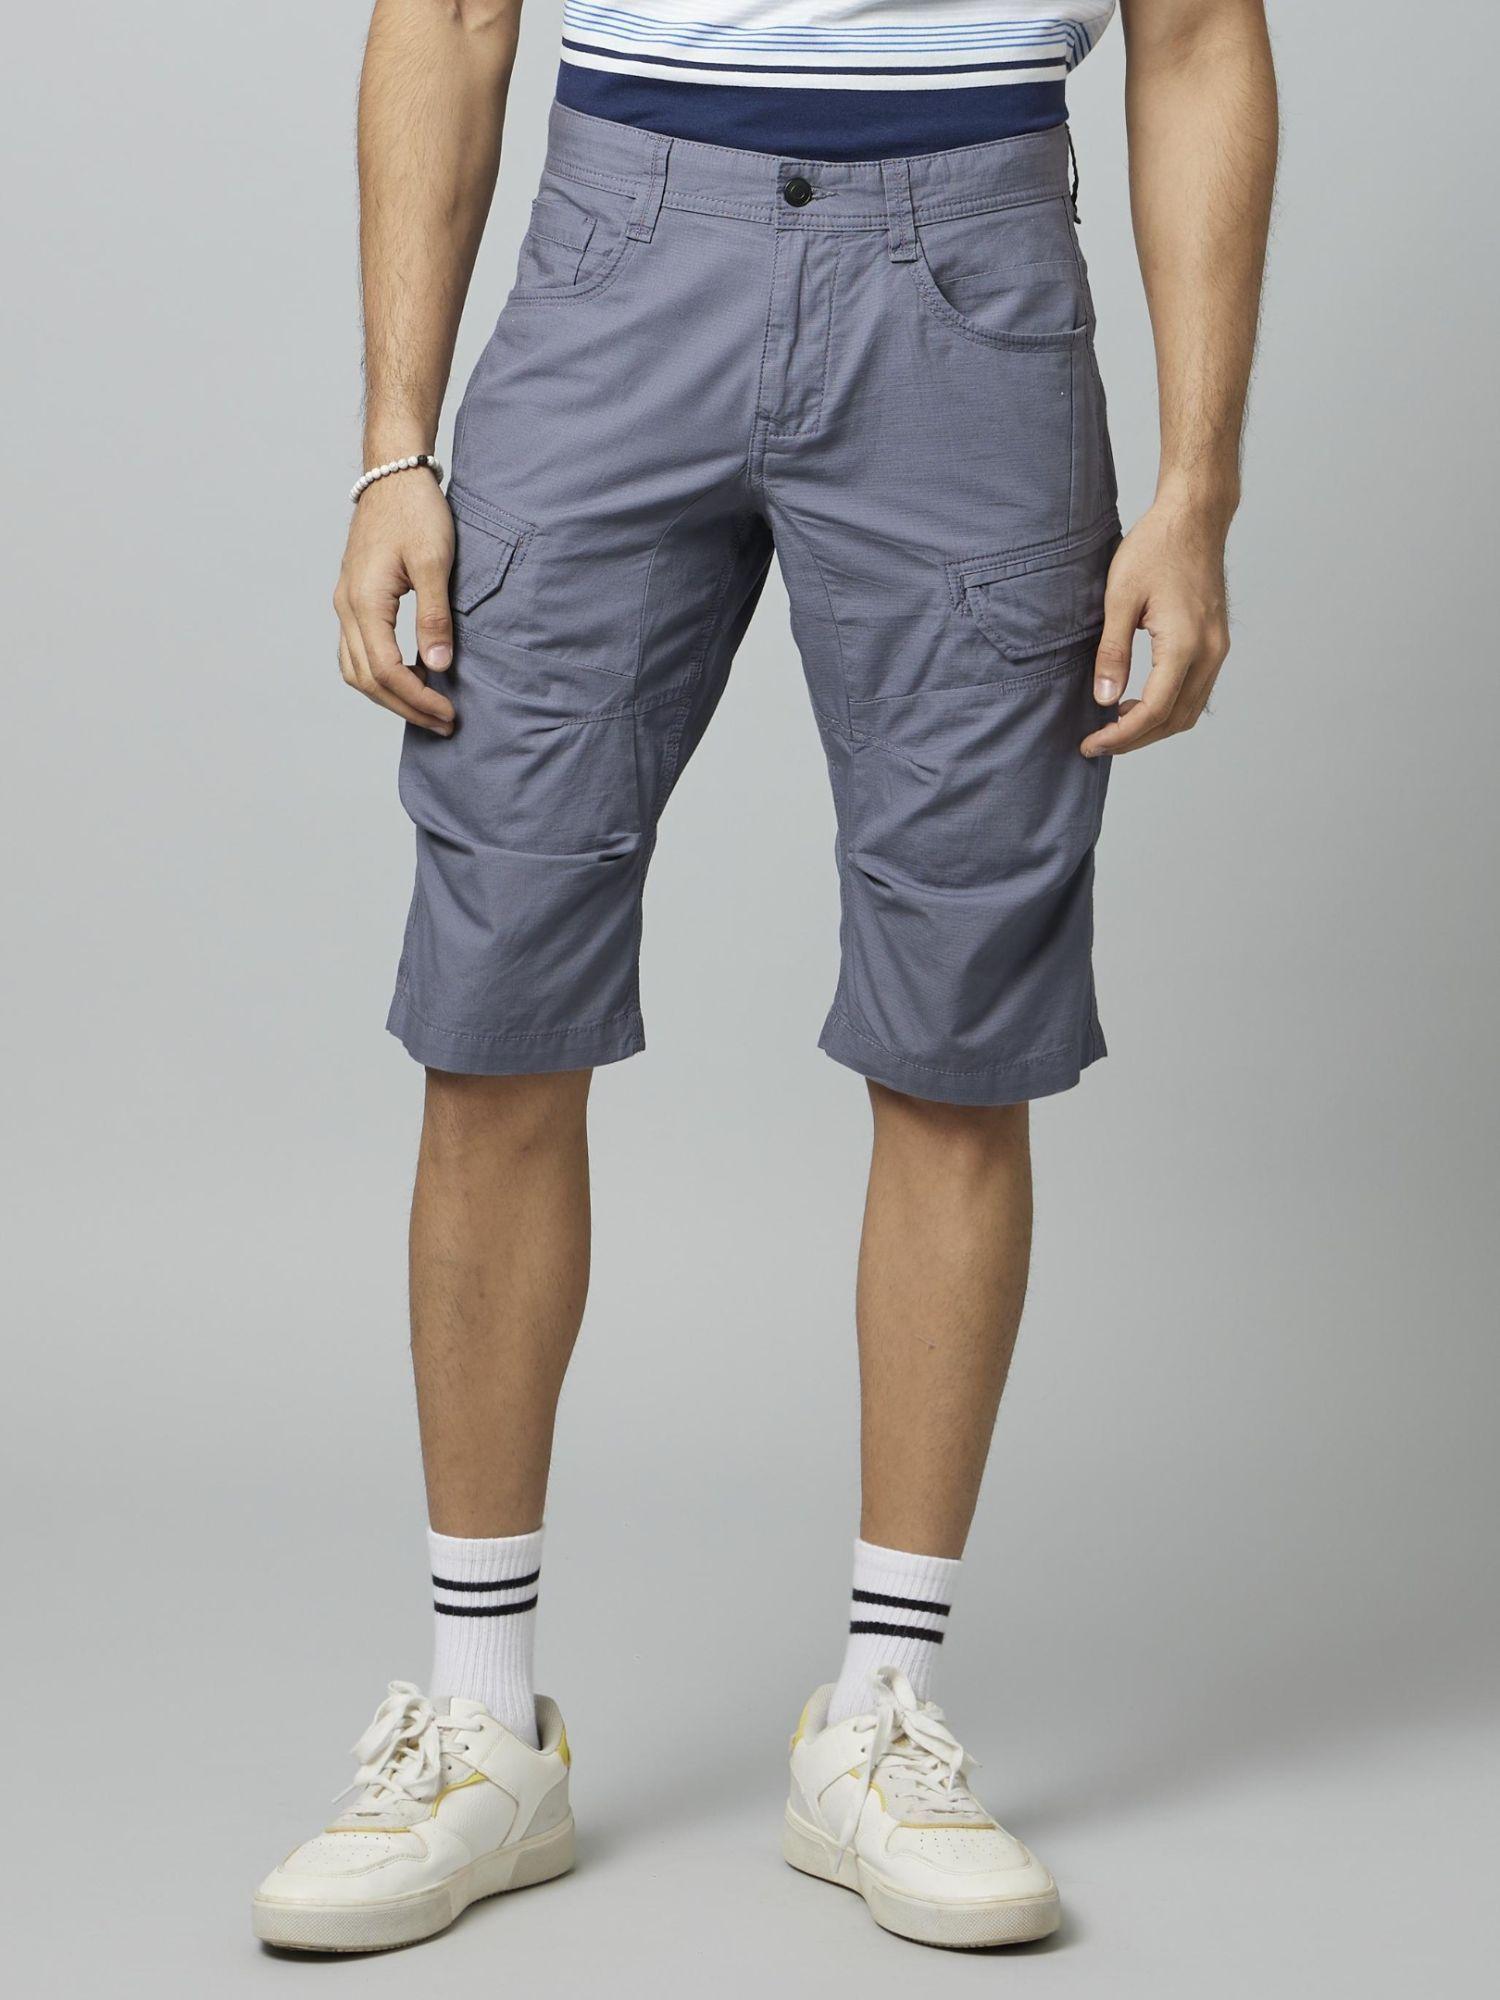 solid grey cotton cargo shorts